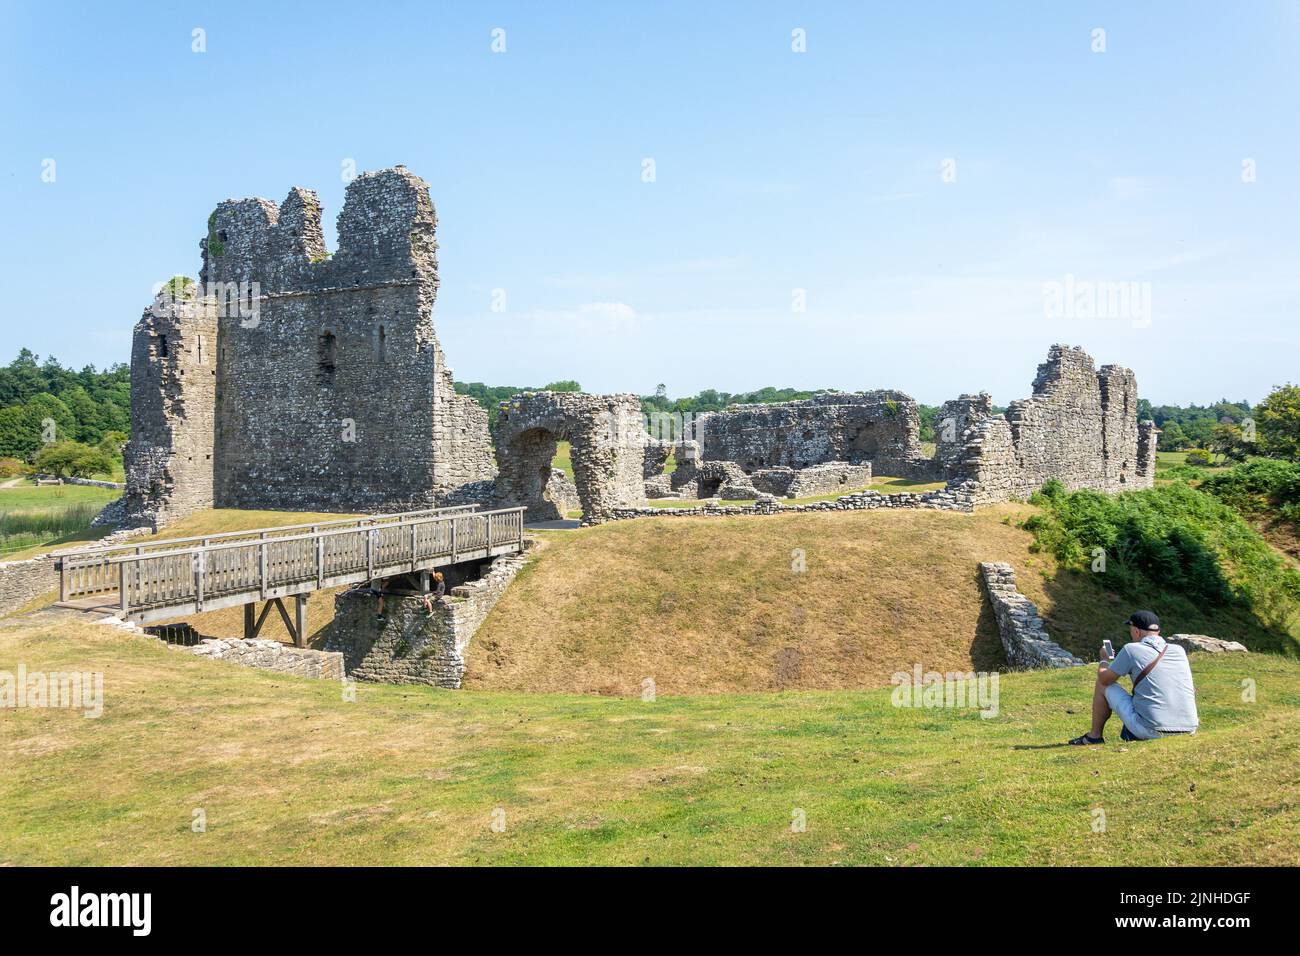 Ruins of Norman stone castle, Ogmore Castle, Ogmore, Vale of Glamorgan (Bro Morgannwg), Wales (Cymru), United Kingdom Stock Photo